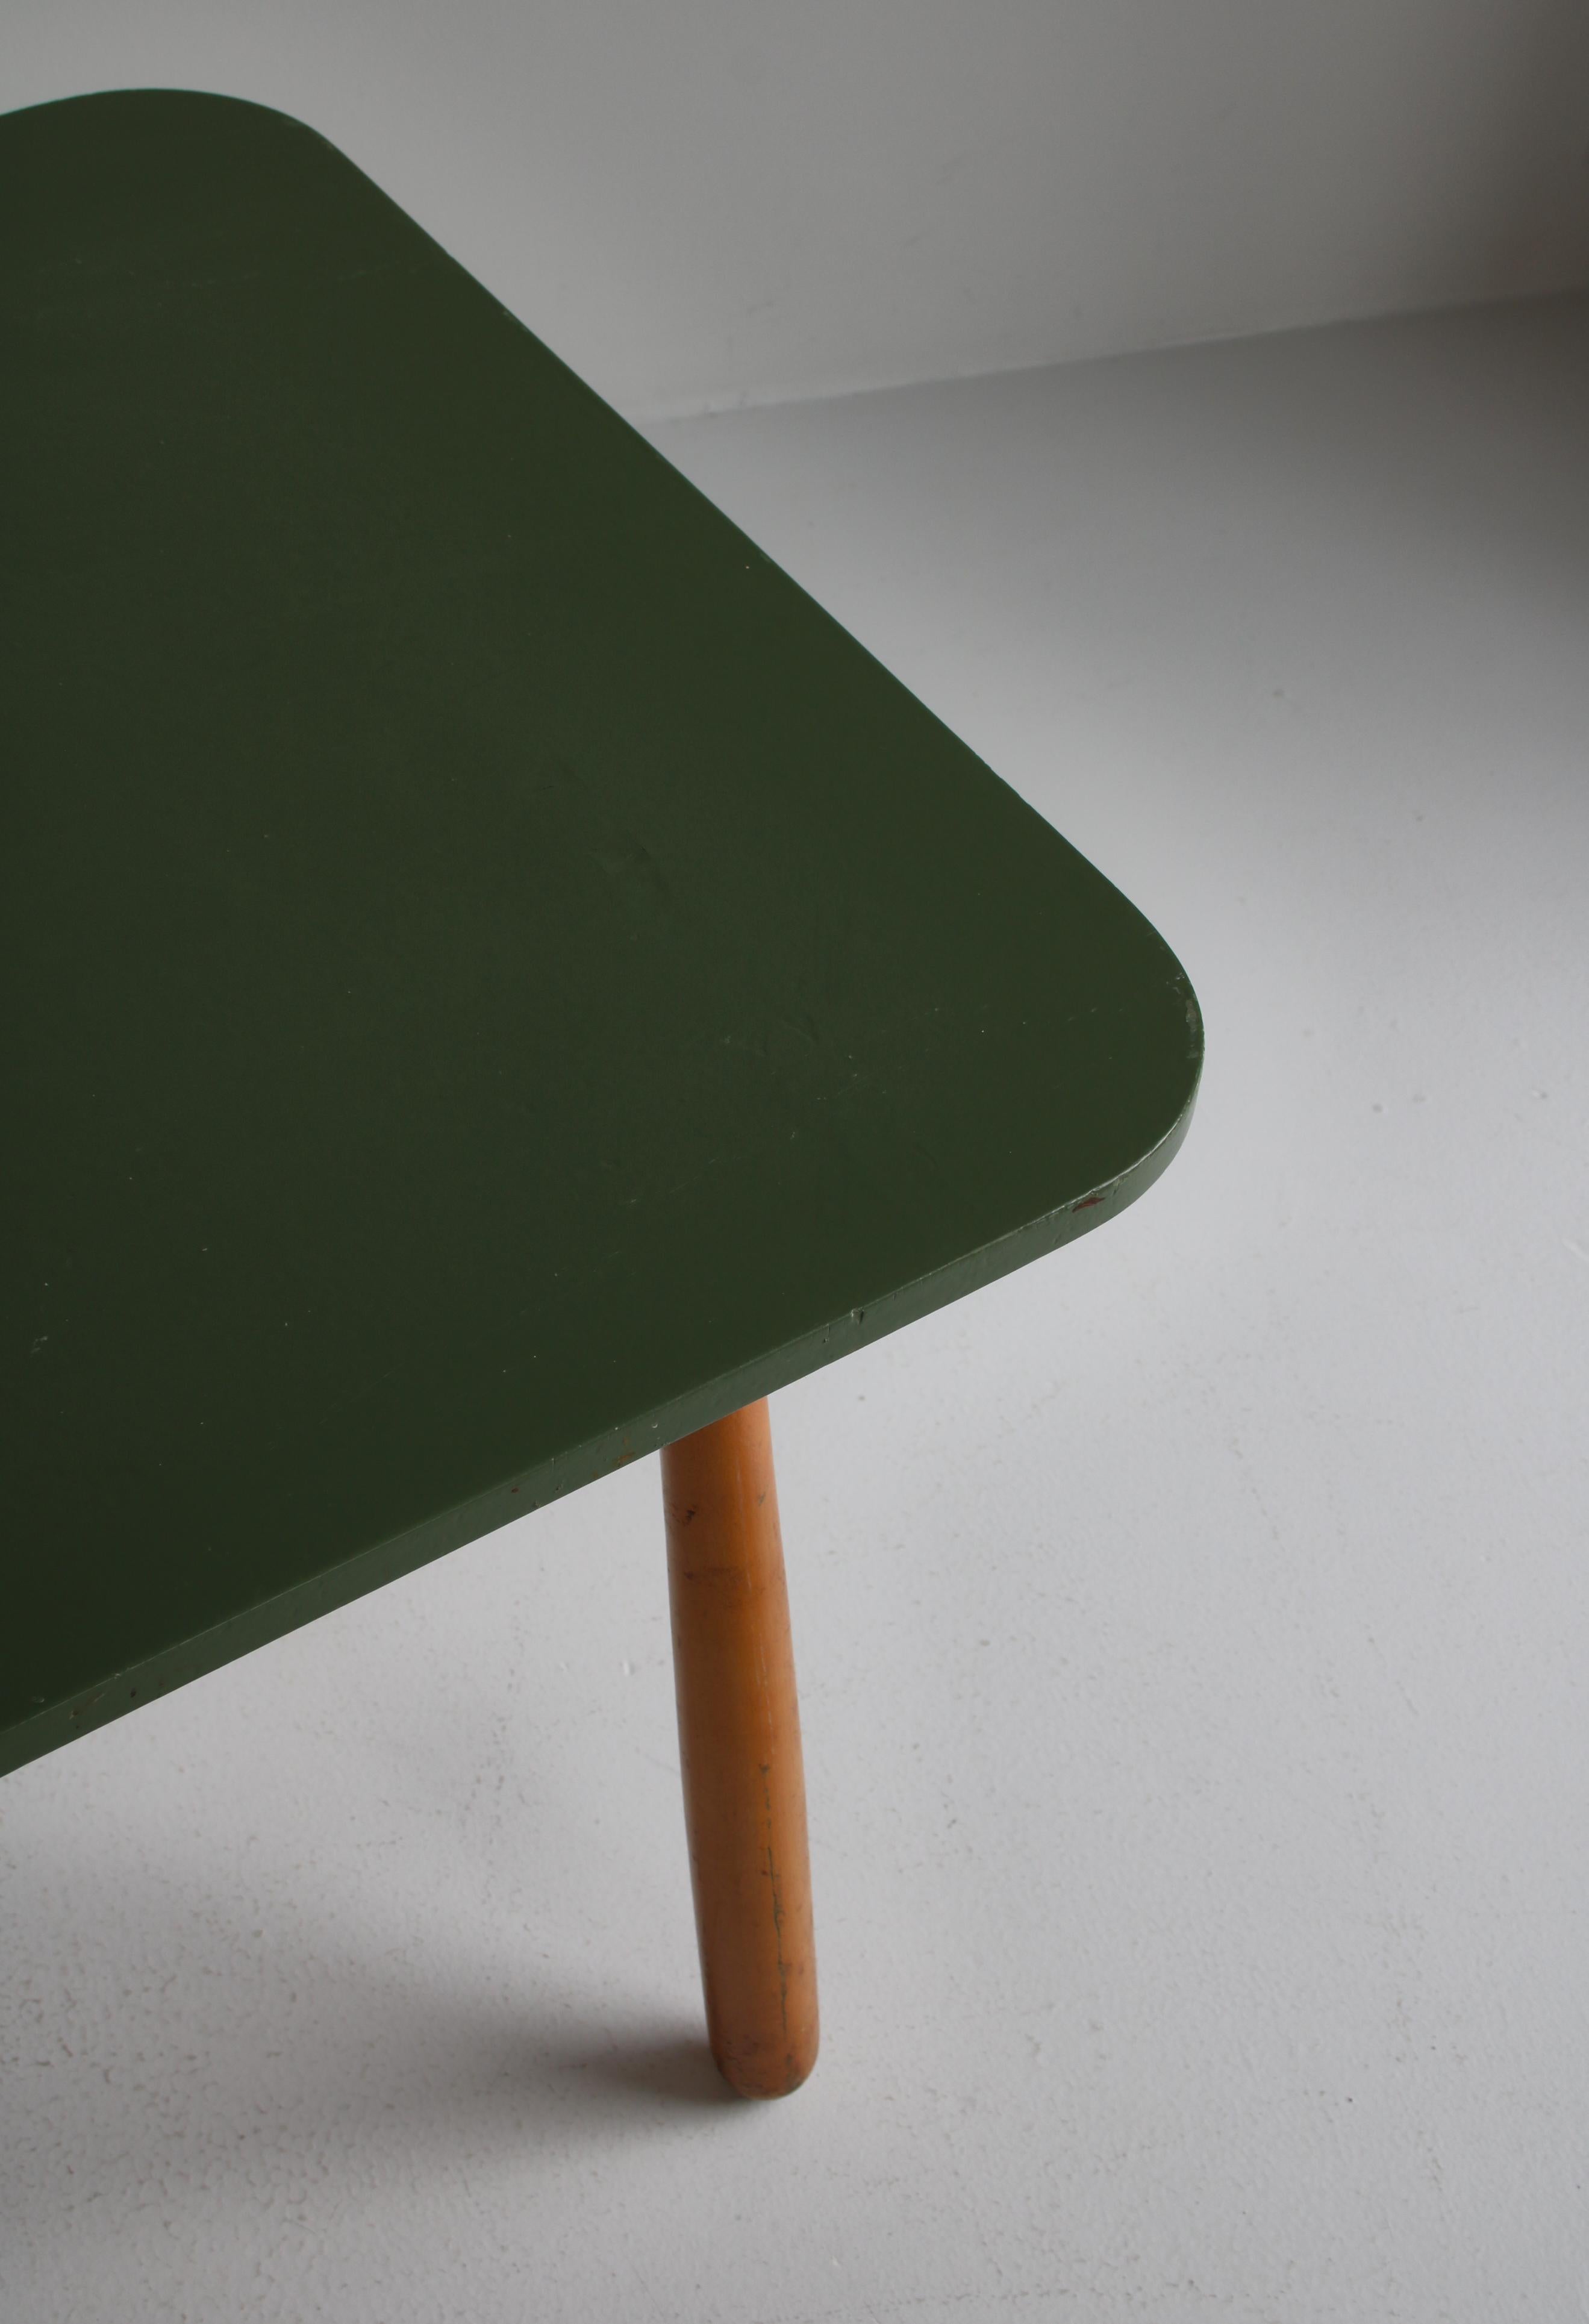 Arnold Madsen Club Legged Desk / Table in Beech, Scandinavian Modern, 1940s For Sale 2